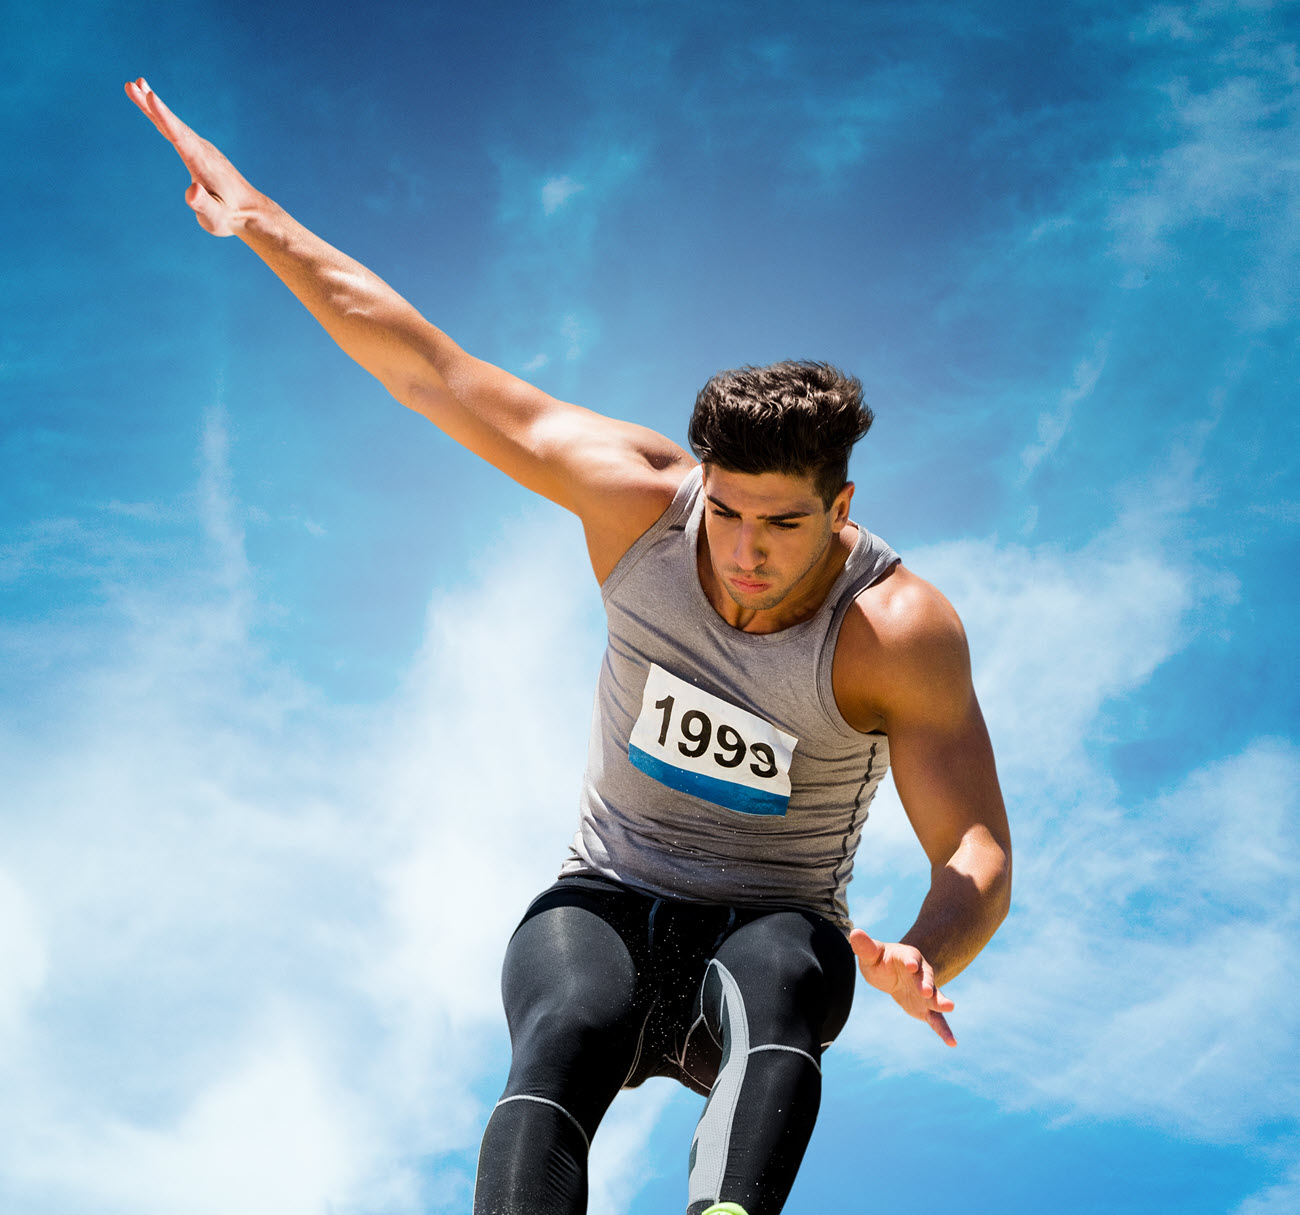 Athlete jumping